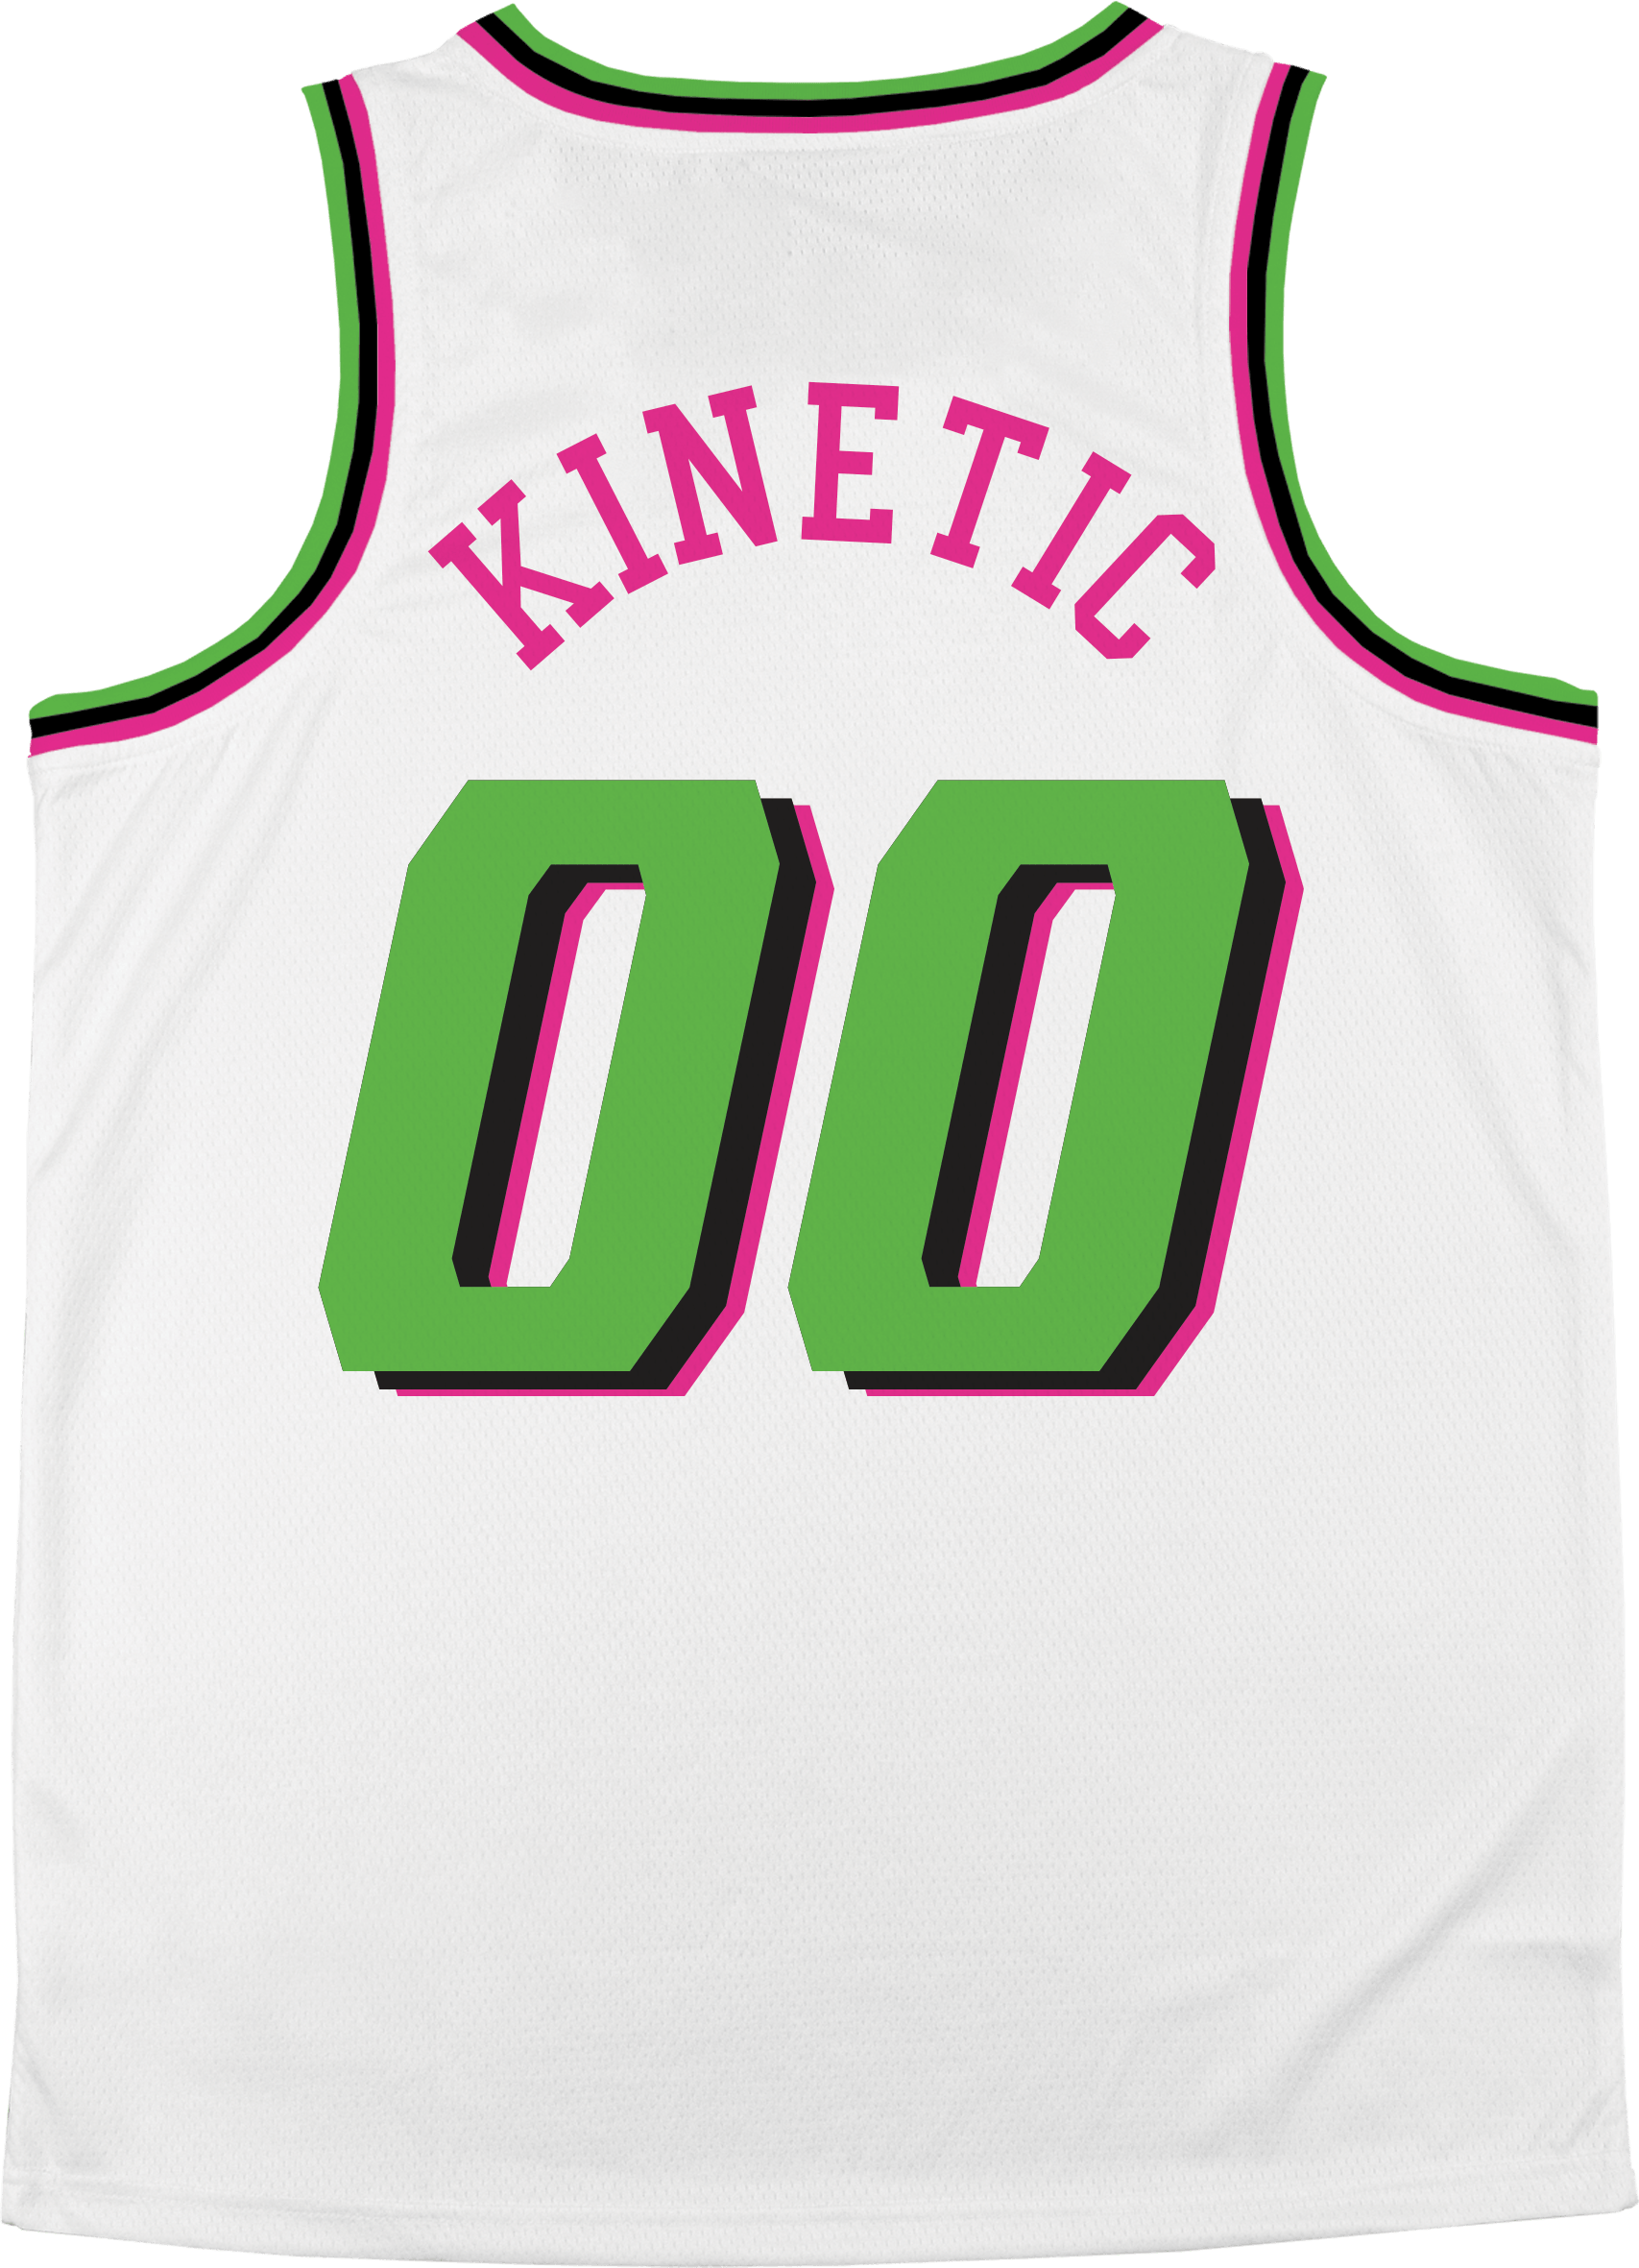 Pi Kappa Alpha - Bubble Gum Basketball Jersey - Kinetic Society